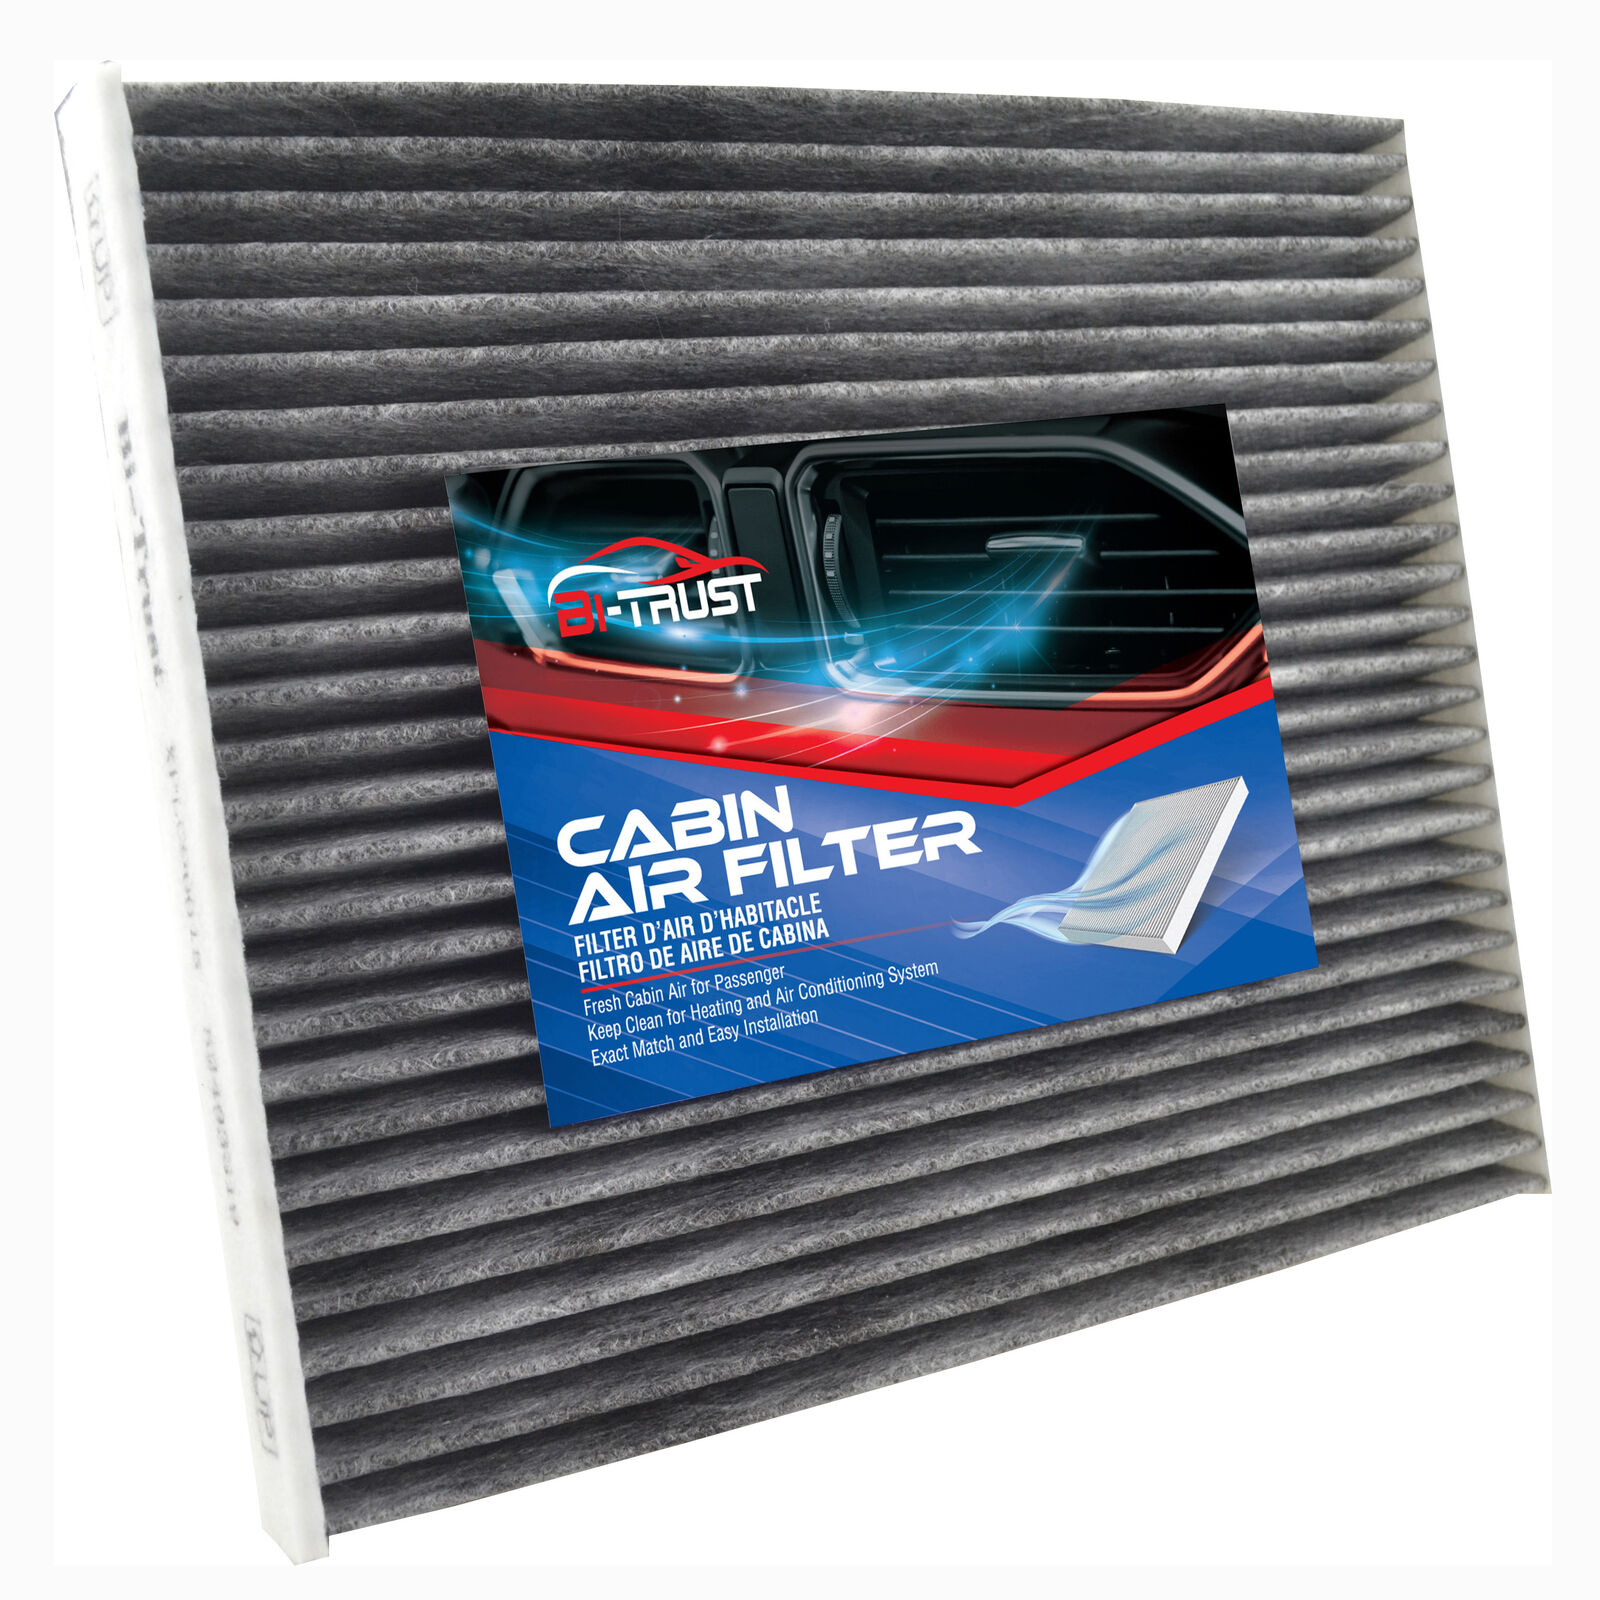 Cabin Air Filter for Chevrolet Chevy Cobalt 2005-2010 Hhr 06-11 Pontiac G5 07-10